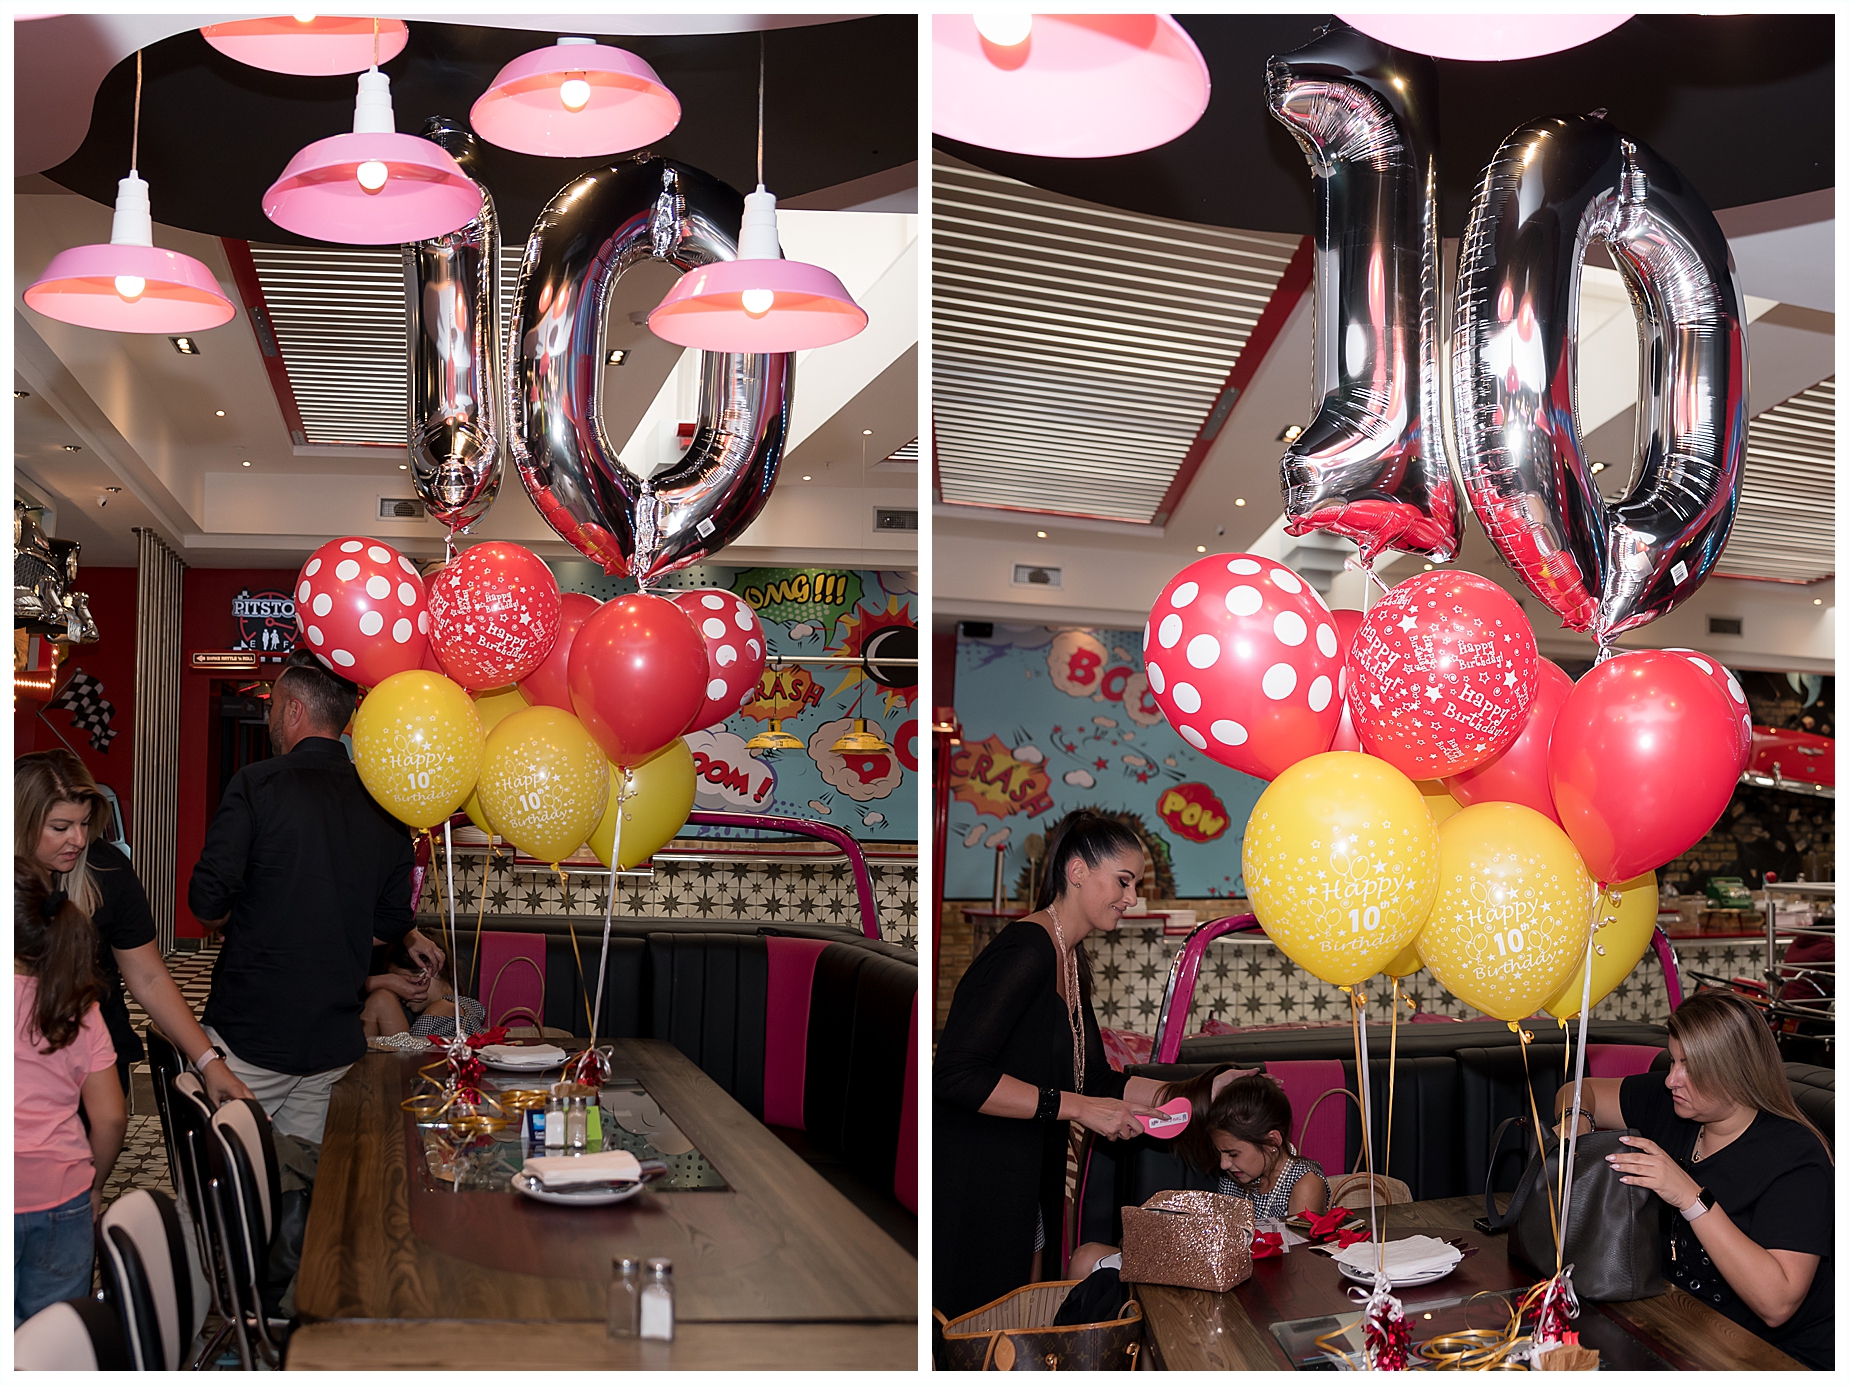 10th birthday party balloon decor